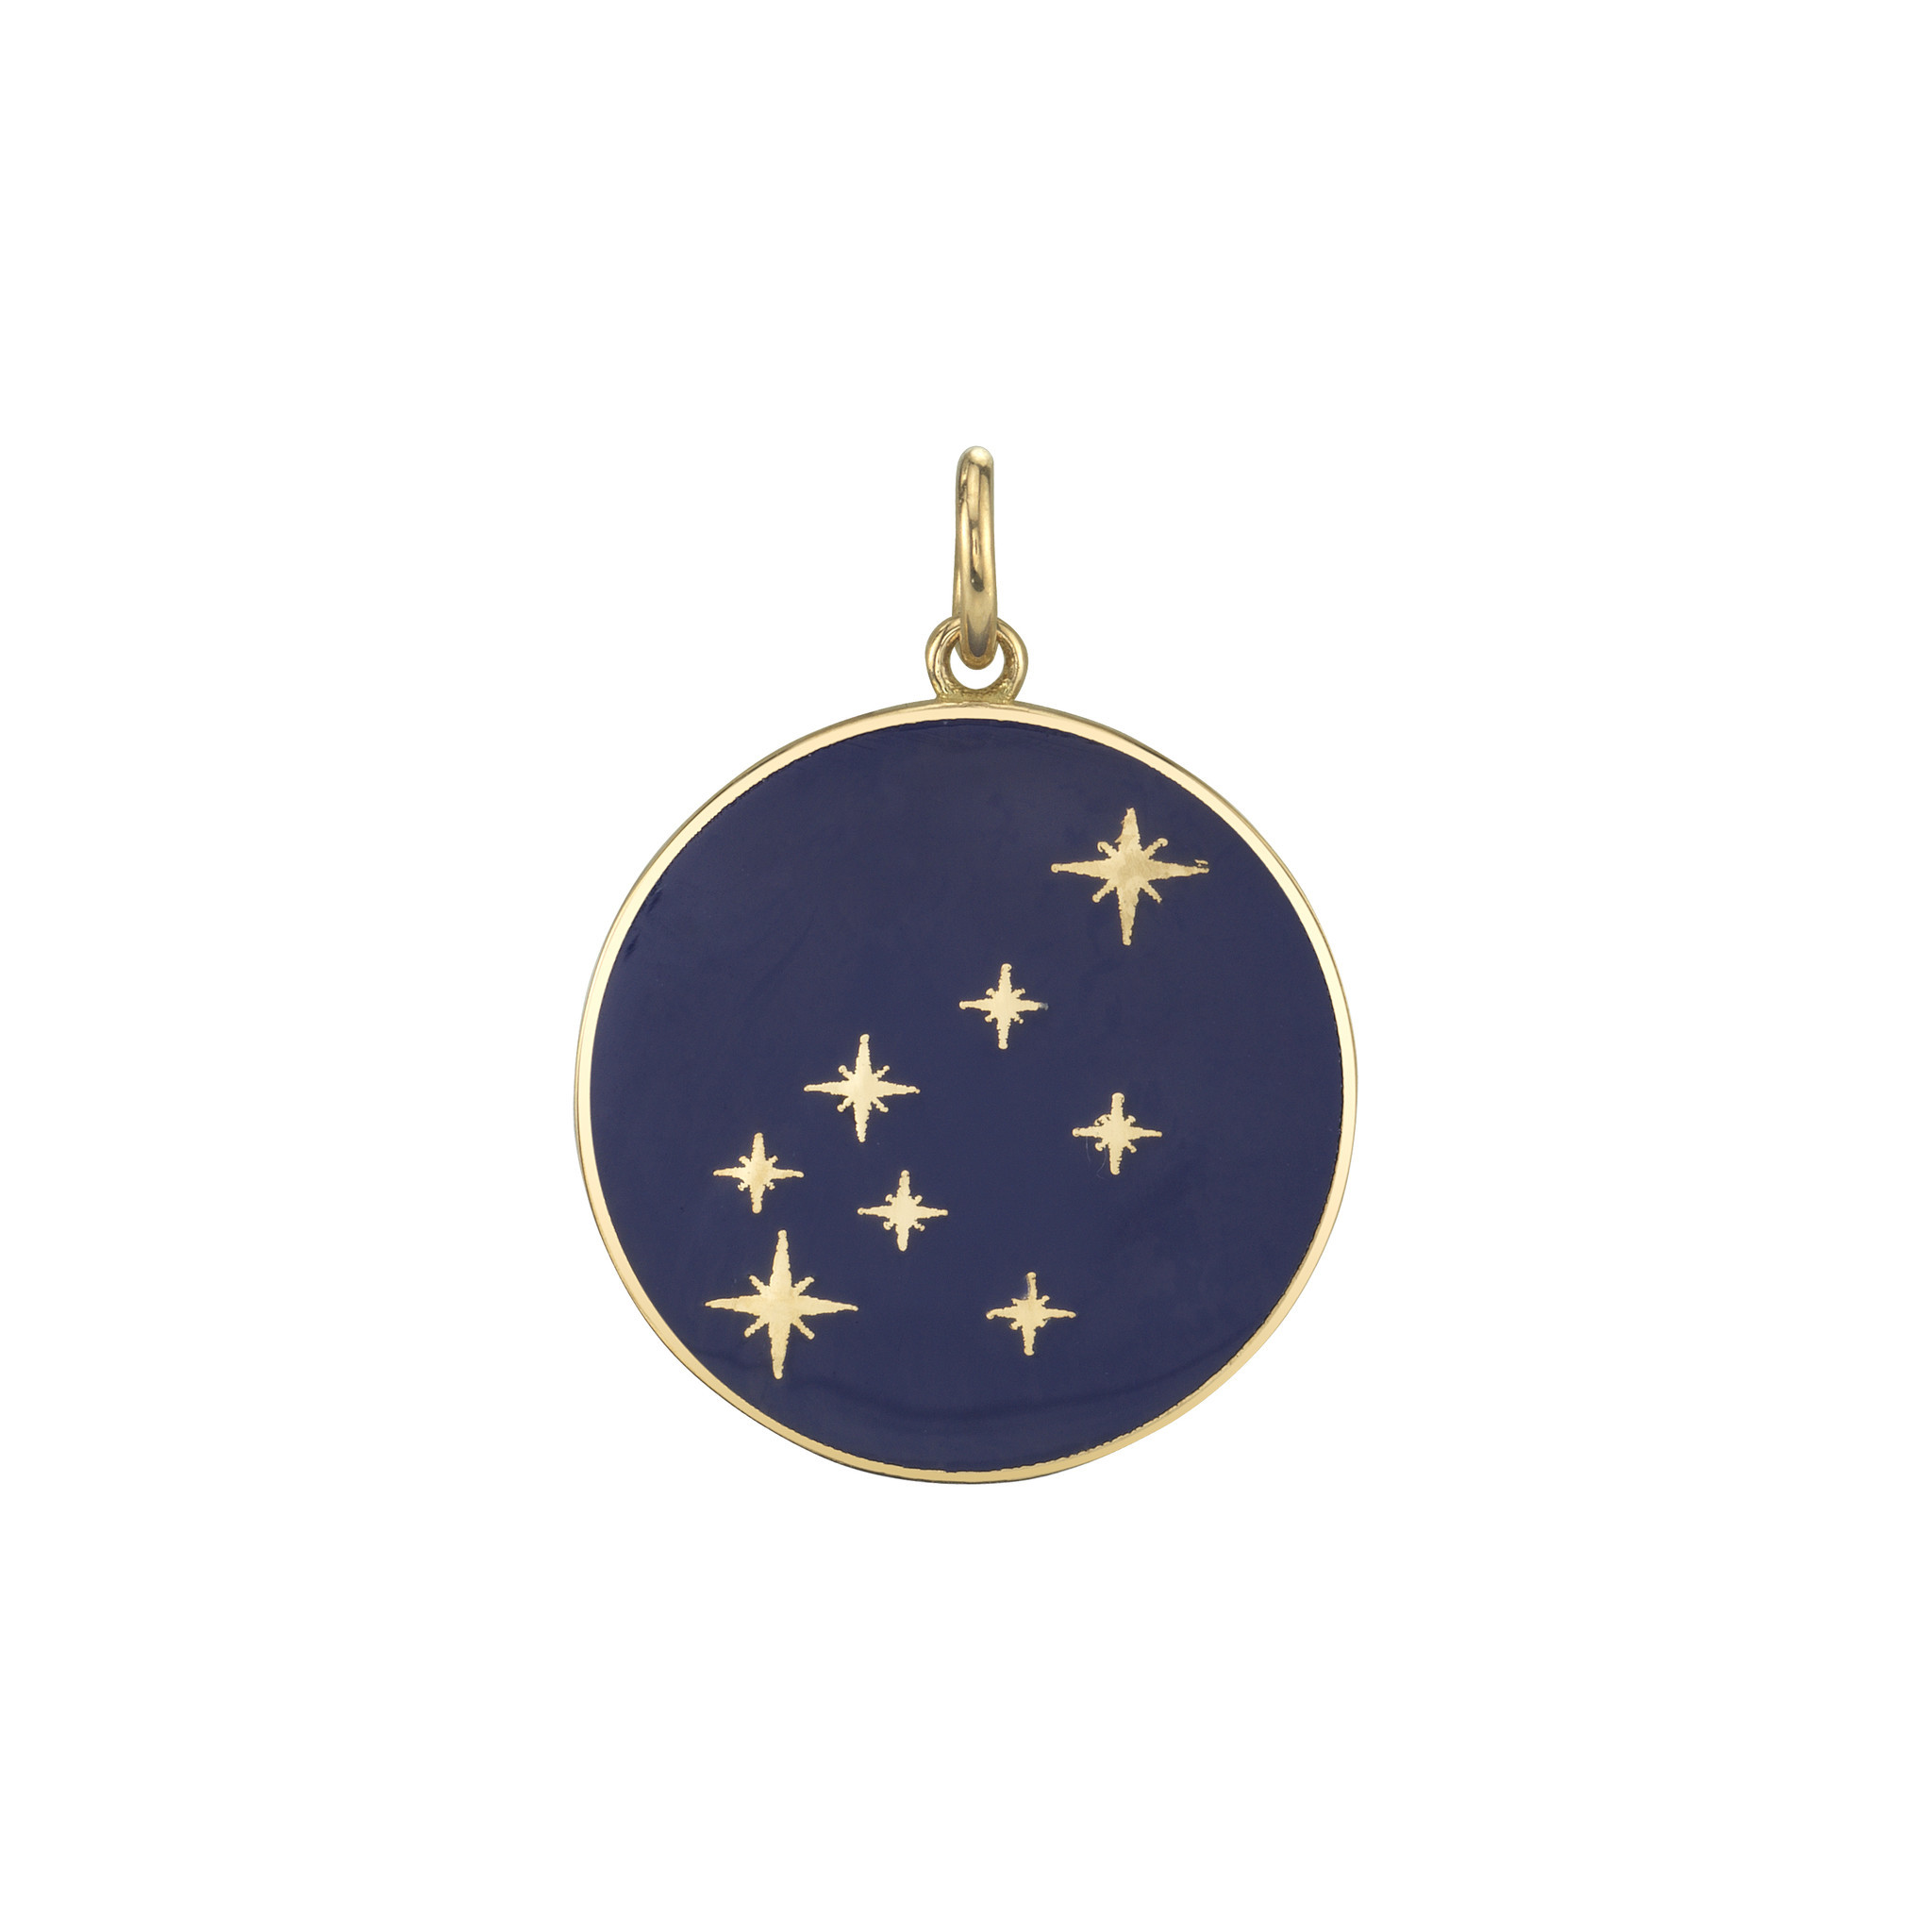 Bare Collection's Constellation Aquarius Diamond Enamel Pendant.